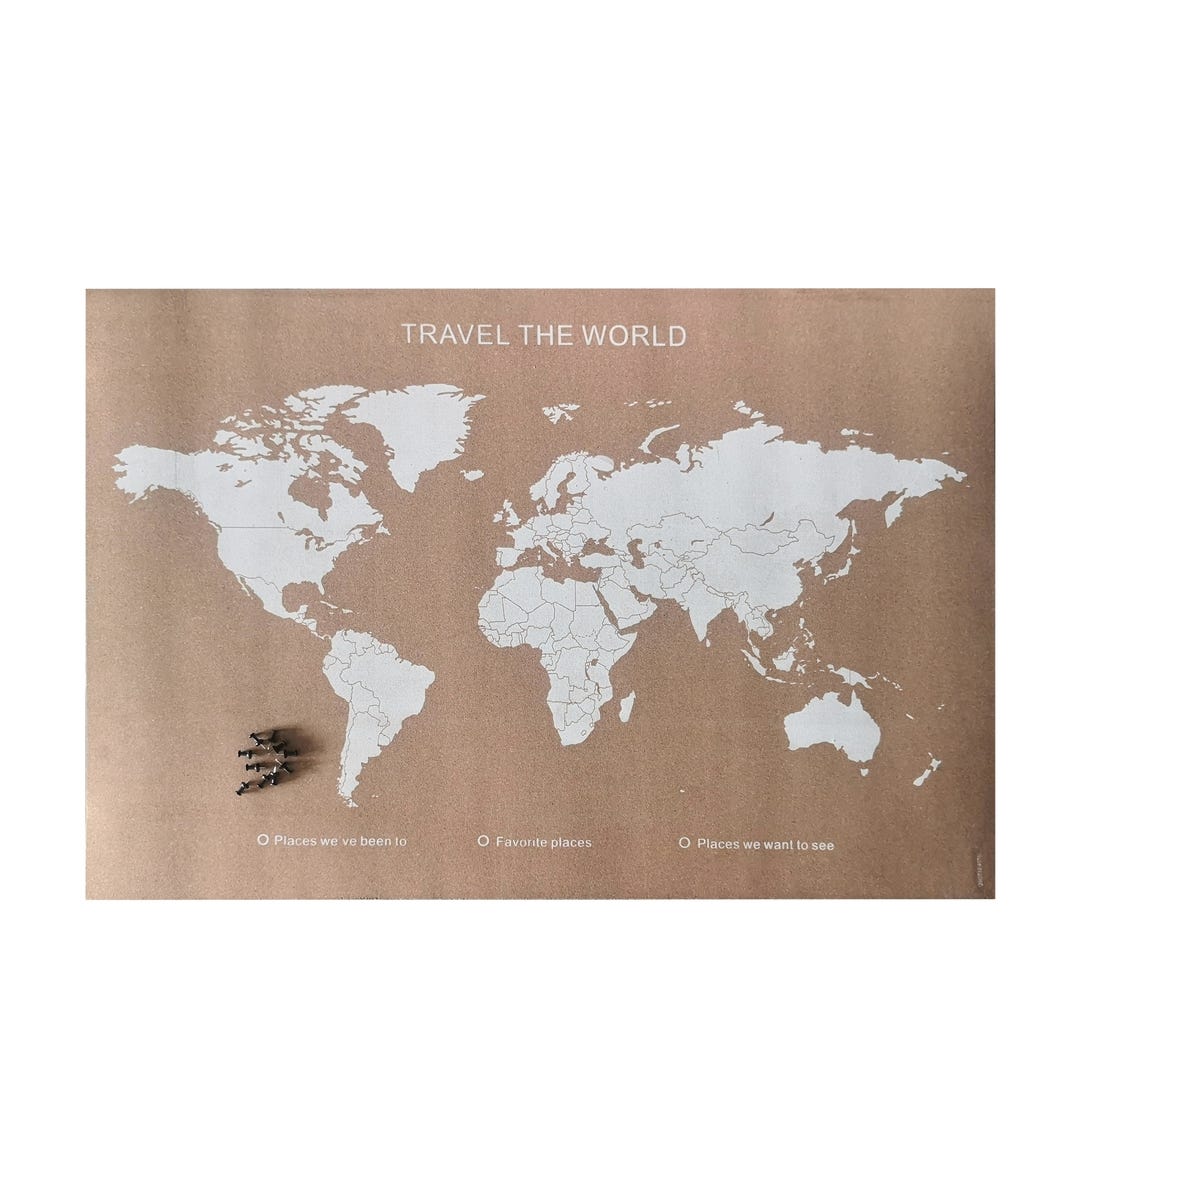 Grande carte du monde en liège 60x90cm